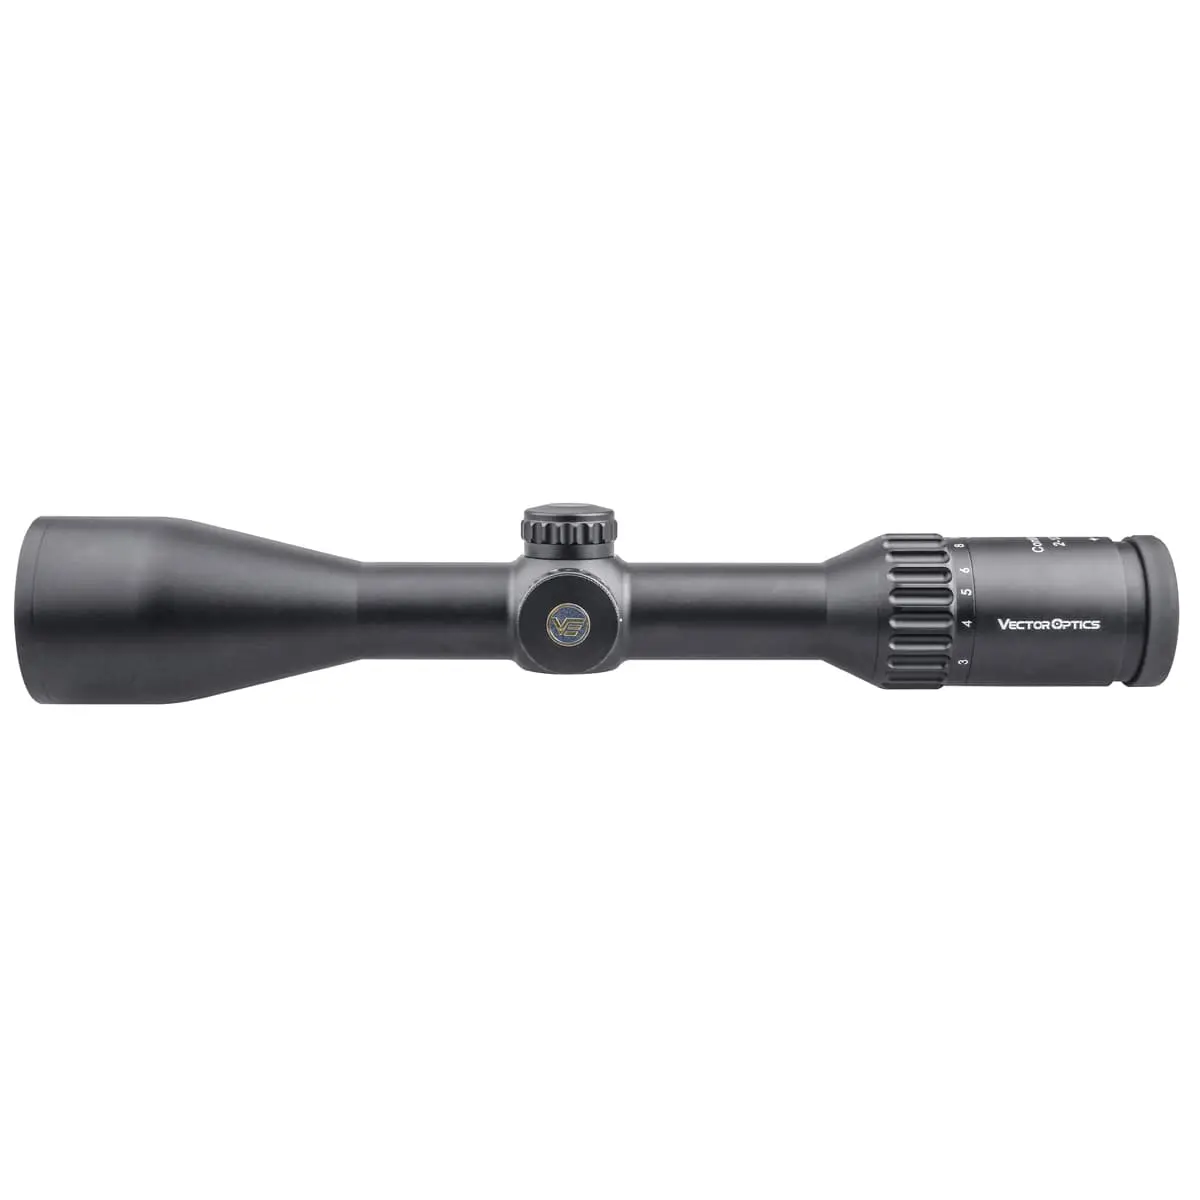 Continental x6 2-12x50 G4 Hunting Riflescope